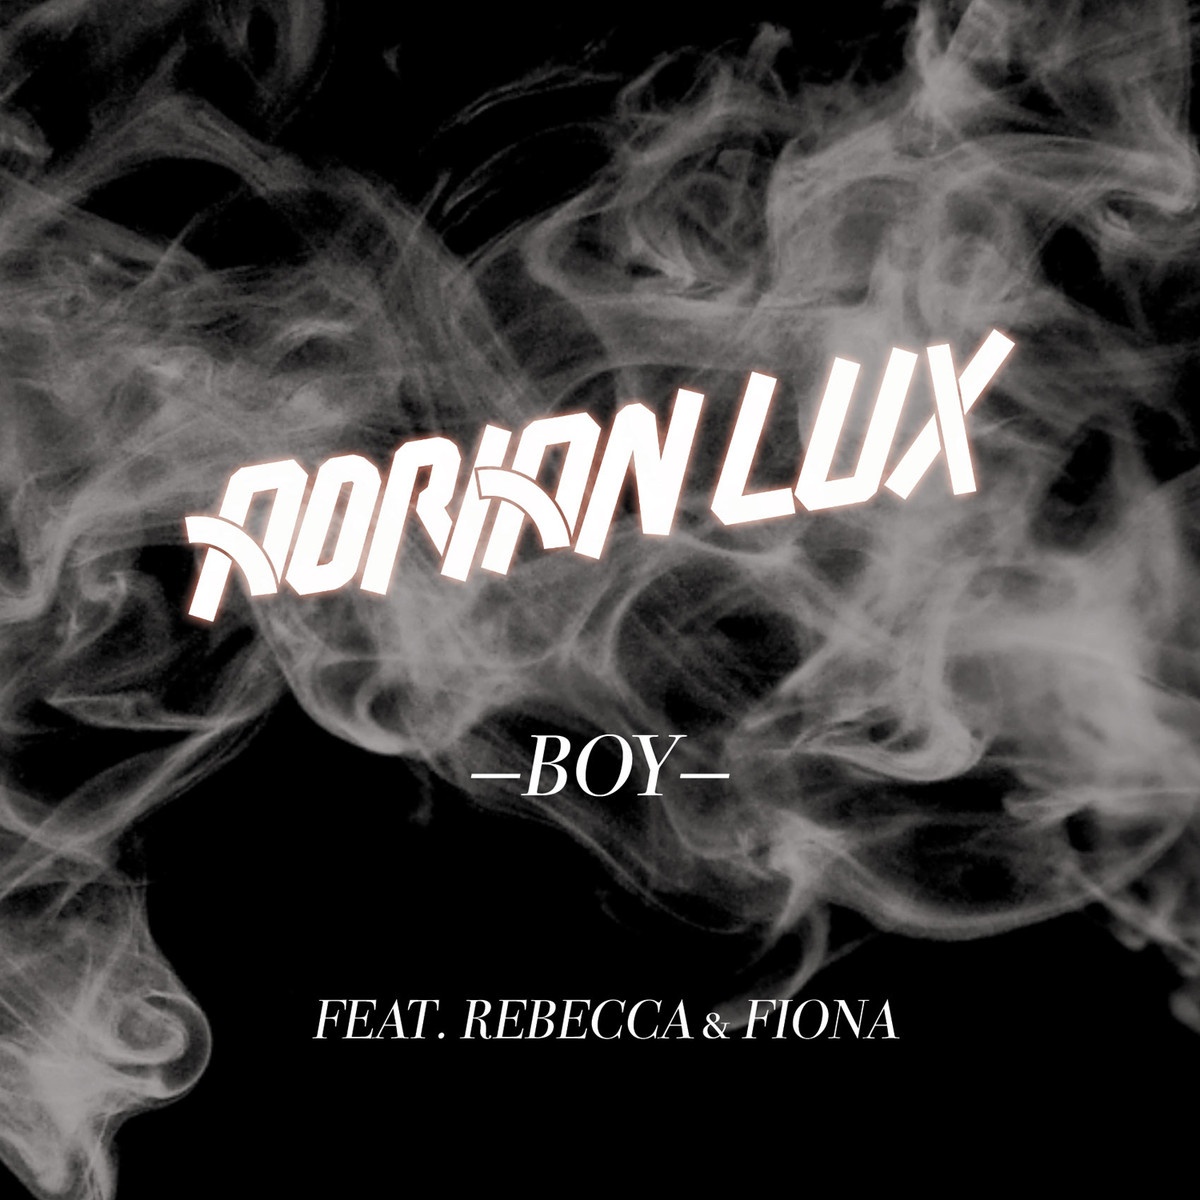 Boy (Hardwell Dub Remix) [feat. Rebecca & Fiona]